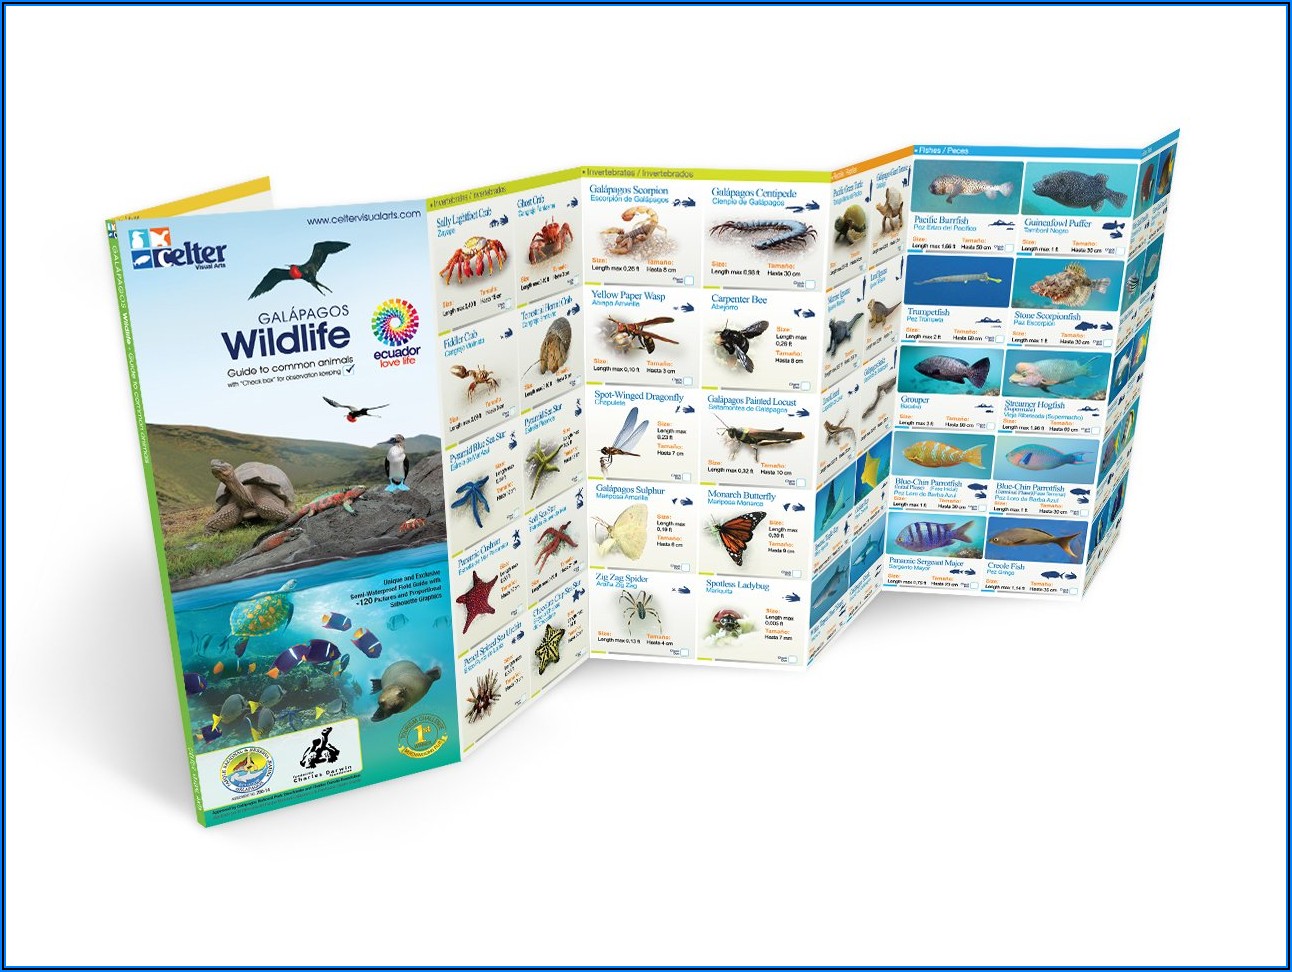 Galapagos Islands Travel Brochure